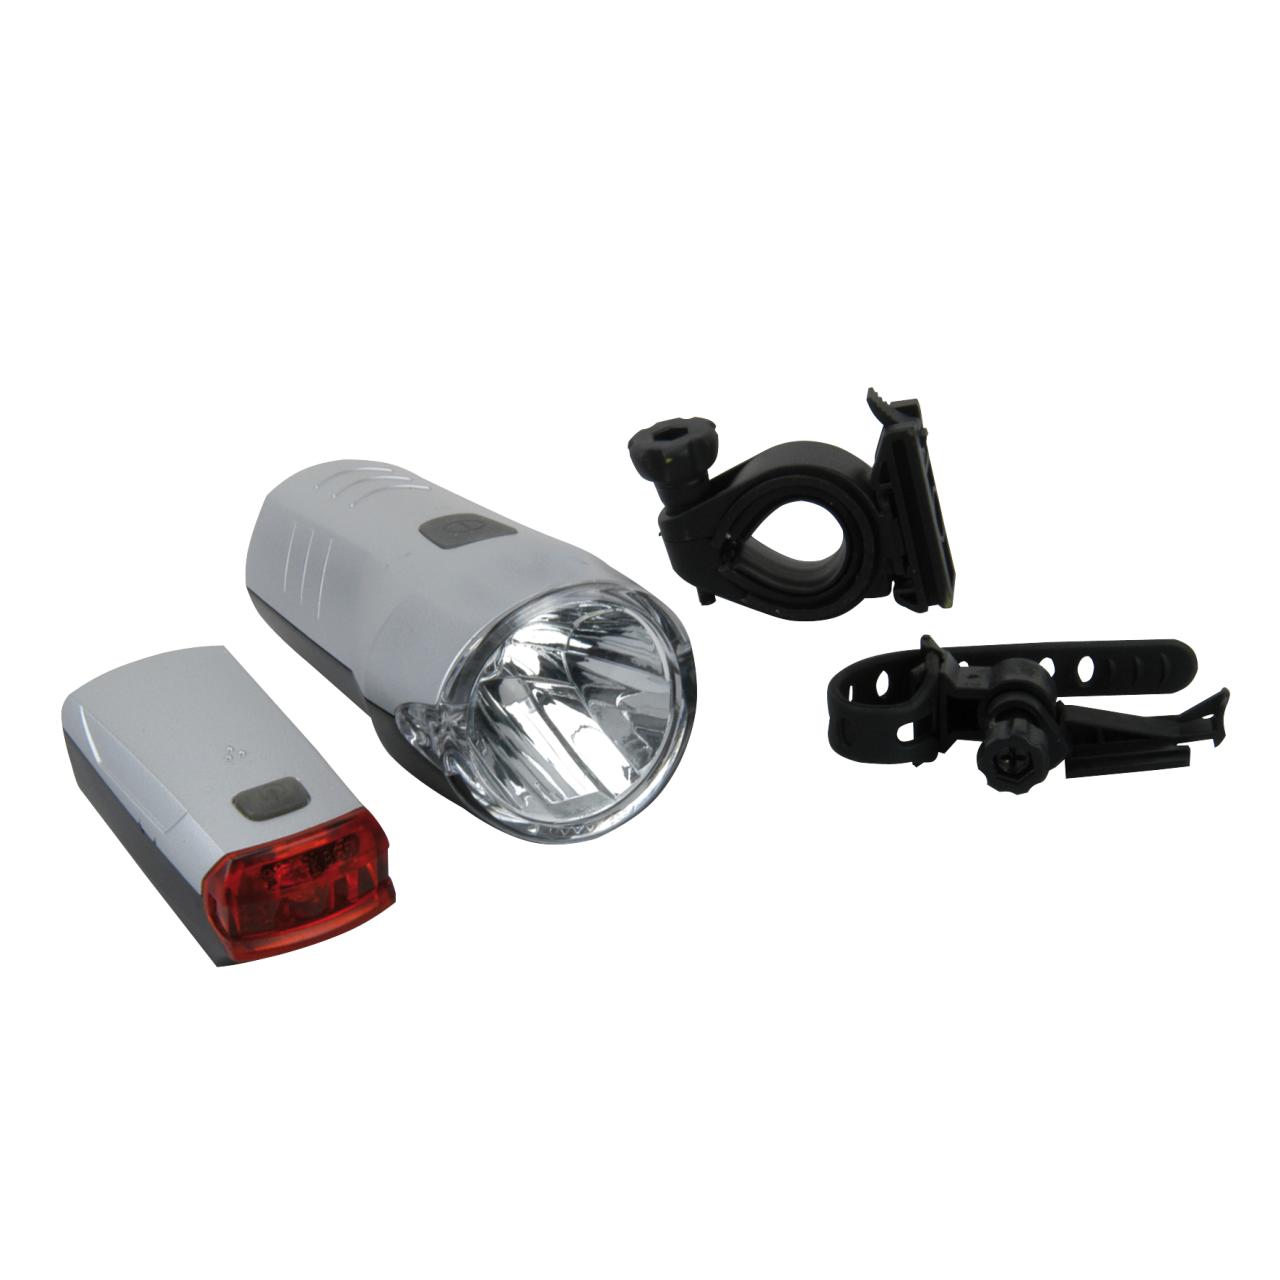 FISCHER Fahrrad-Batterie-LED Beleuchtungsset 10/20 Lux